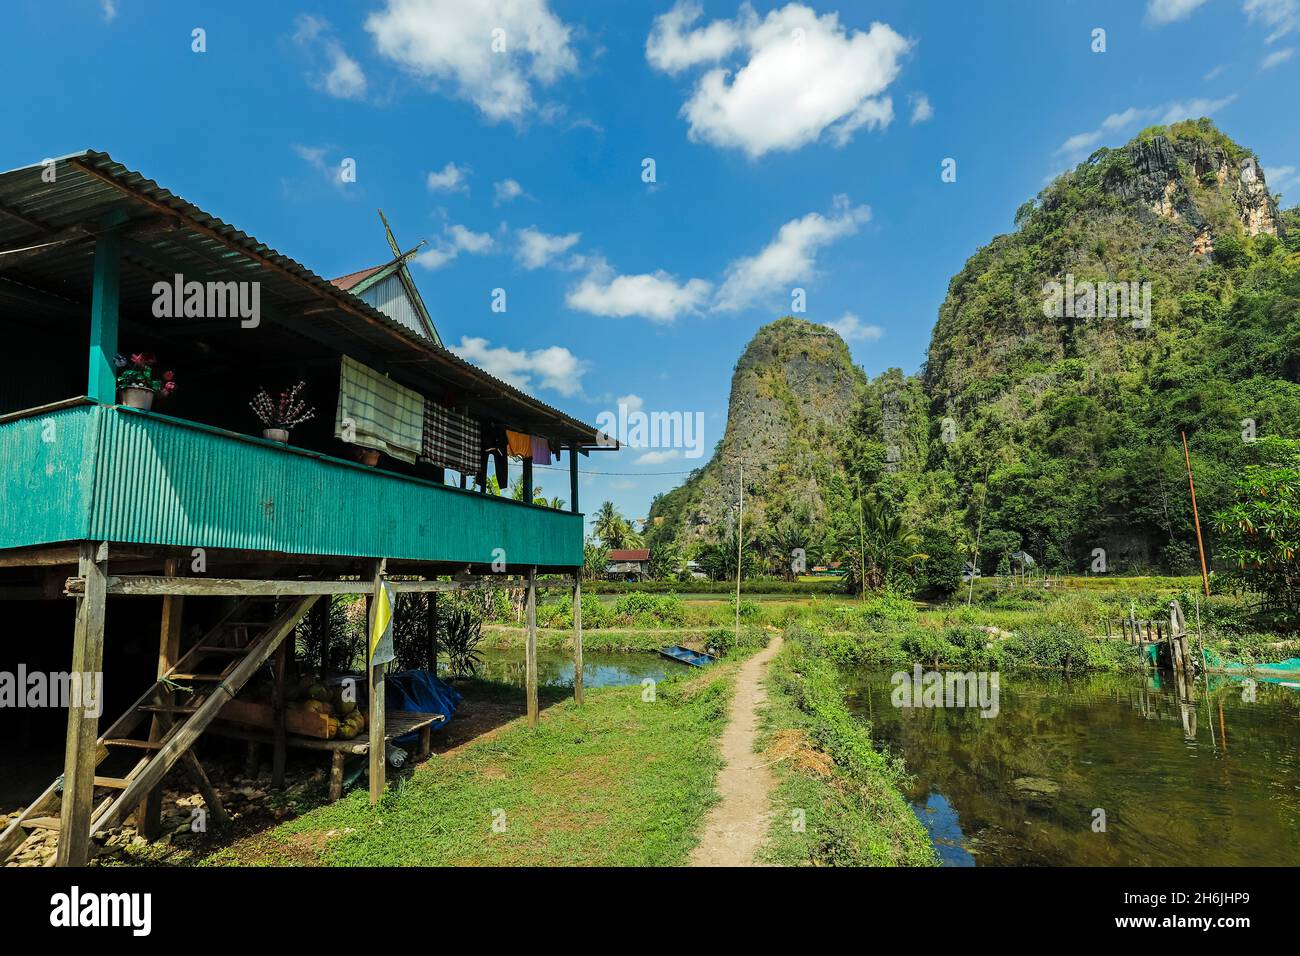 Stilt house, fish pond, limestone peaks, Rammang village, karst region, Rammang-Rammang, Maros, South Sulawesi, Indonesia, Southeast Asia, Asia Stock Photo